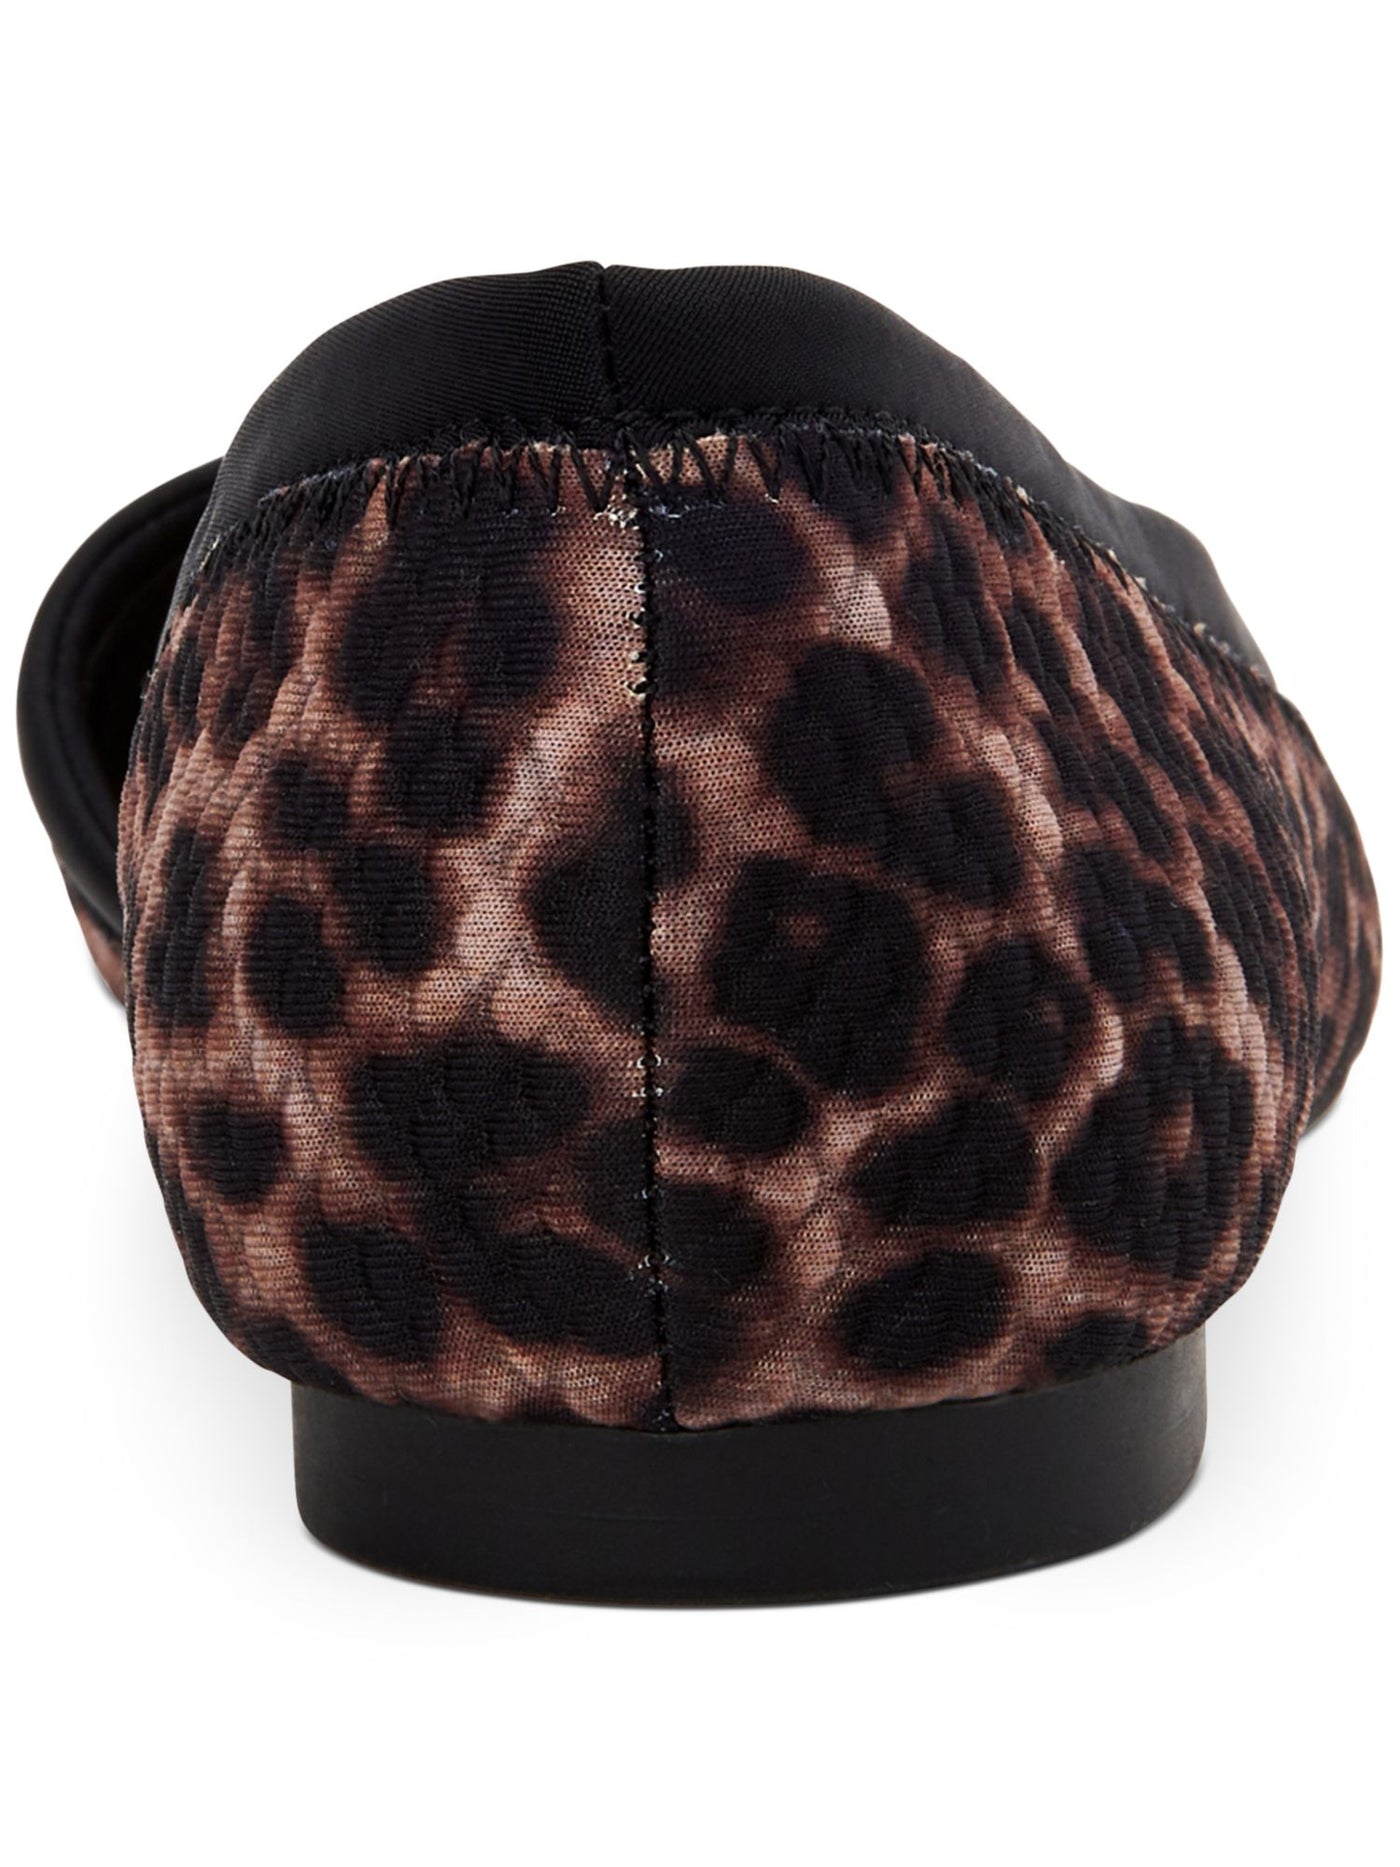 ALFANI Womens Black Leopard Print Dorsay Cushioned Phoennix Pointed Toe Slip On Flats Shoes 7.5 M